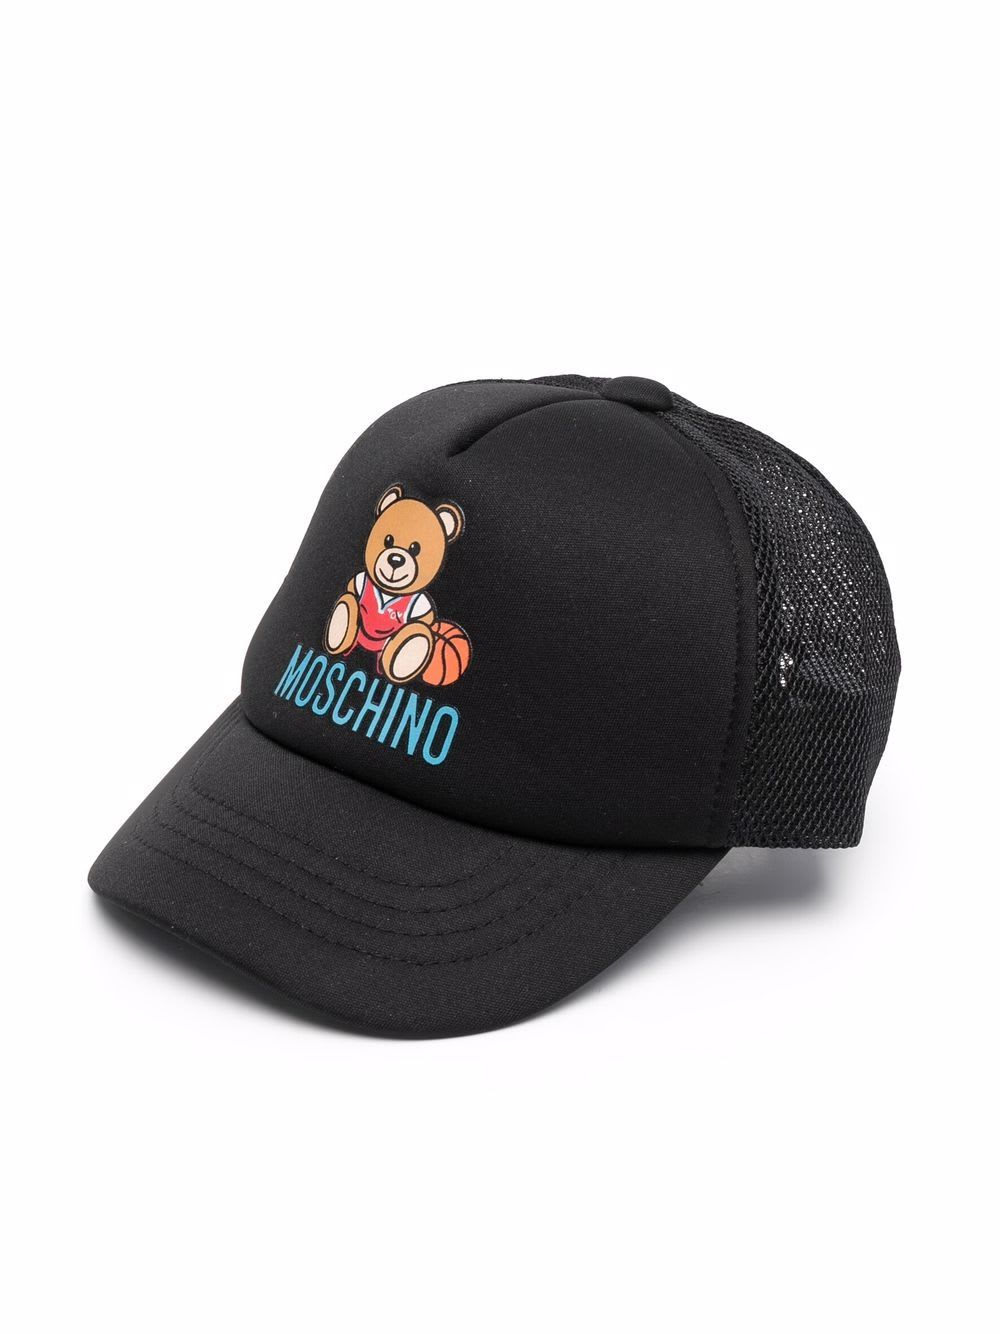 Moschino Kids Black Baseball Hat With Basketball Teddy Bear Print